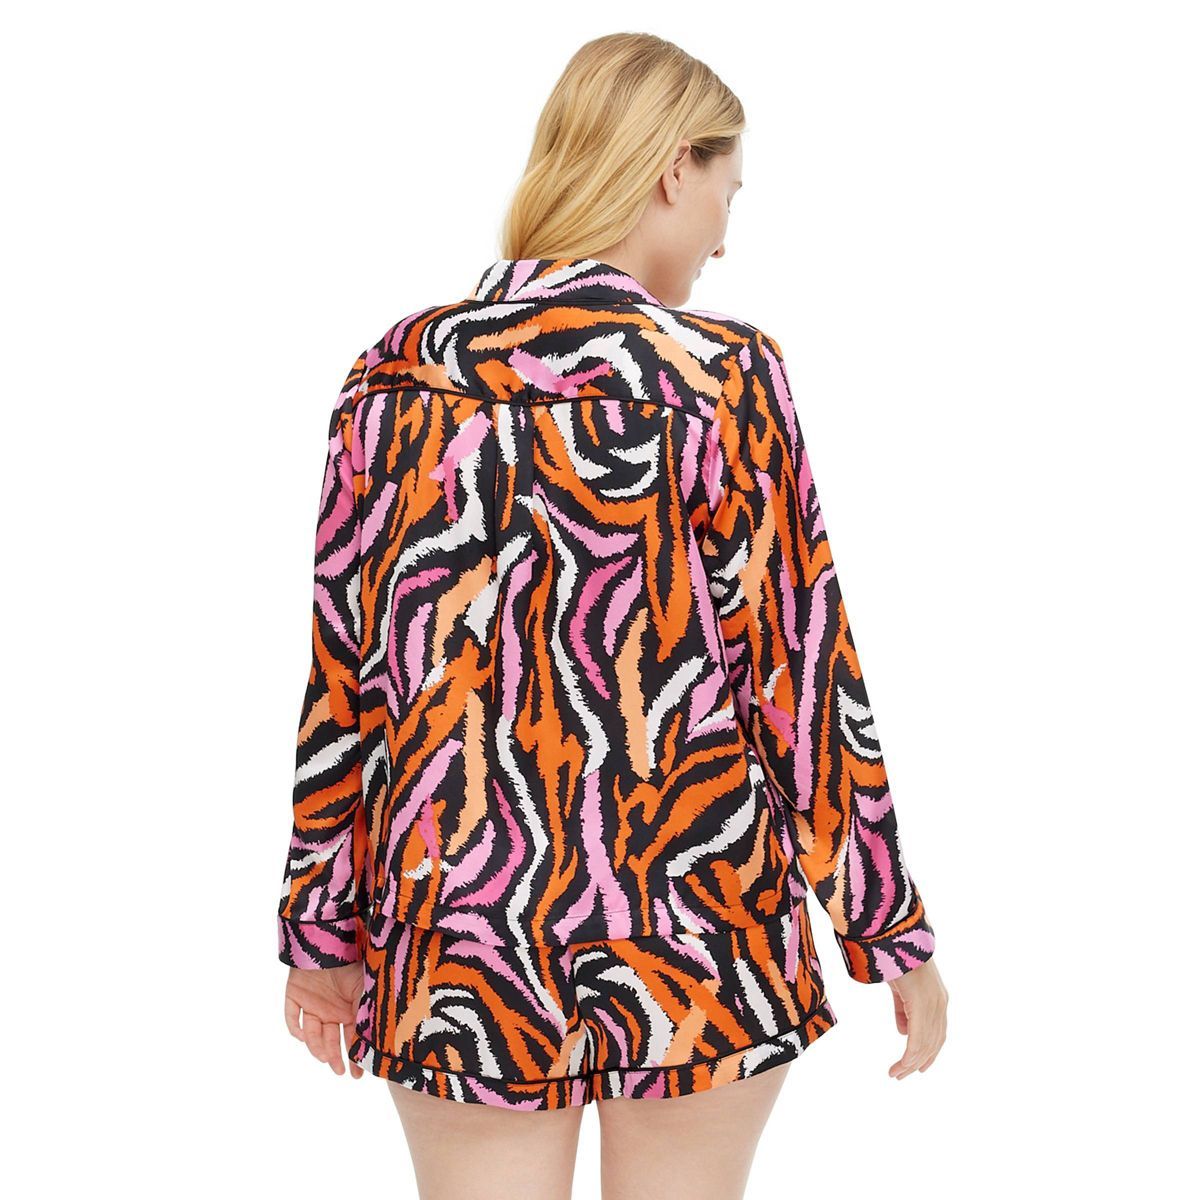 Women's 2pc Long Sleeve Notch Collar Top and Shorts Disco Zebra Pink Pajama Set - DVF for Target | Target